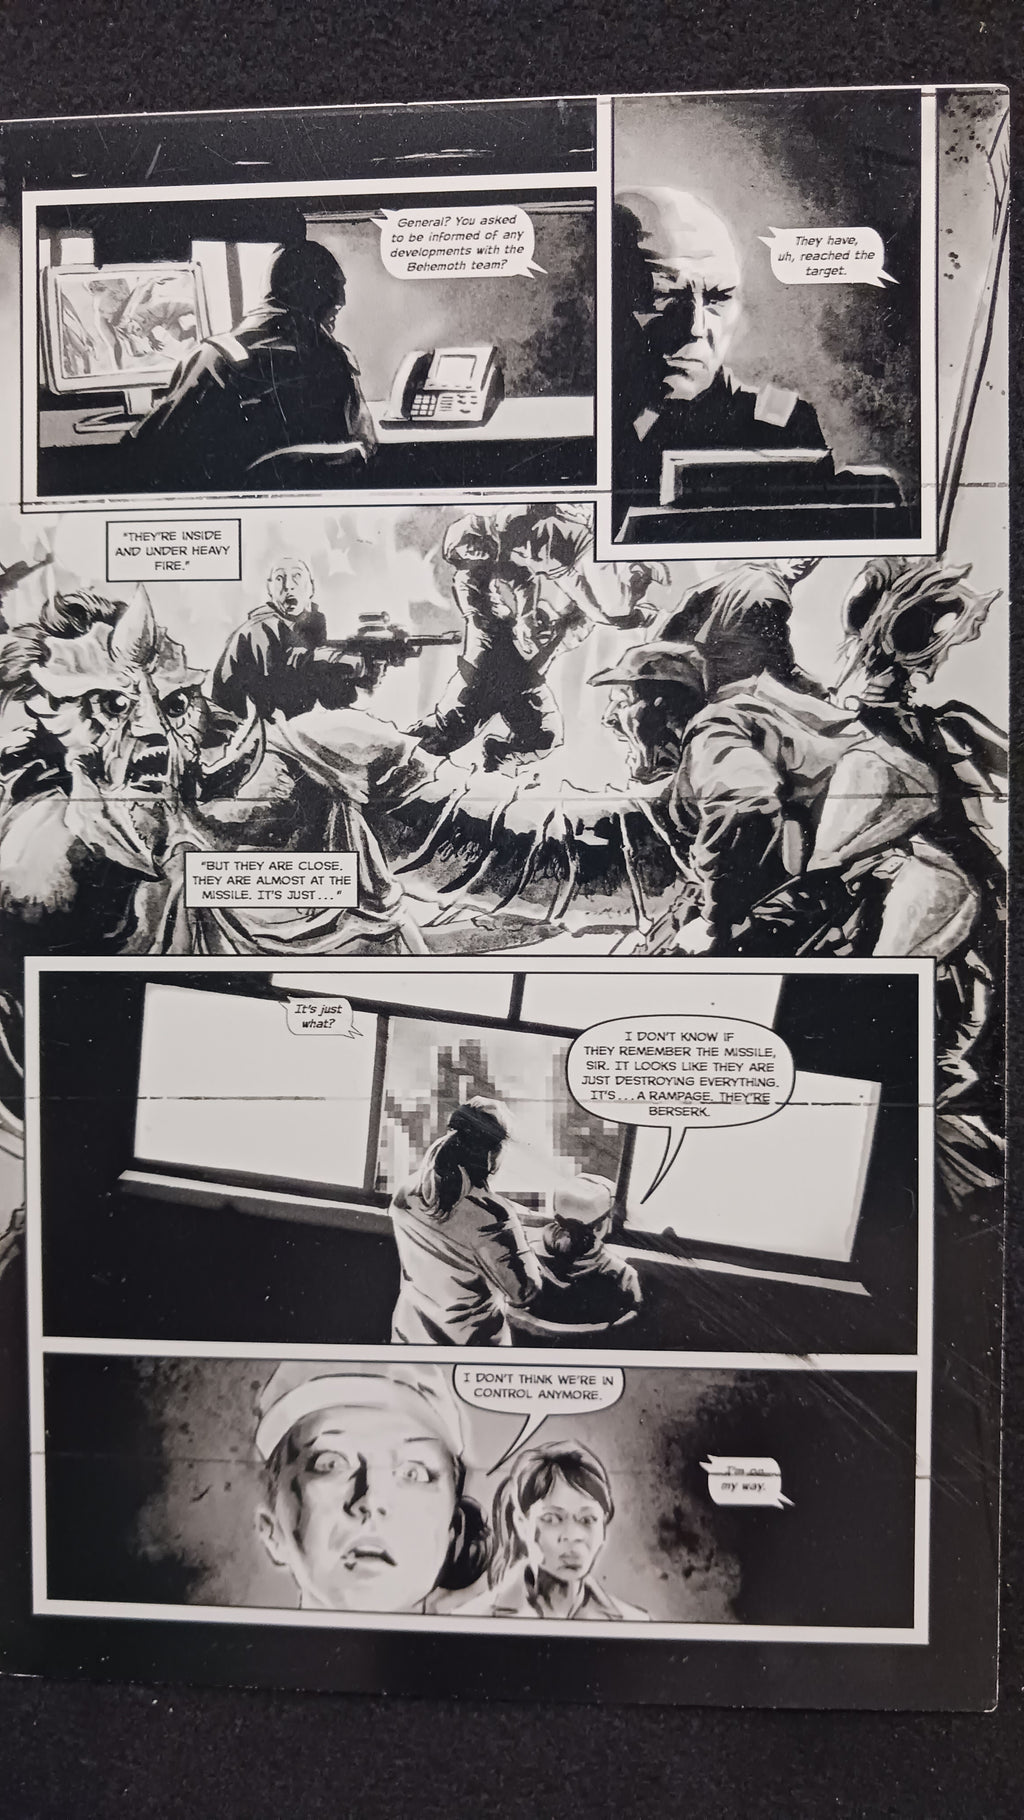 Behemoth #4 - Page 11  - PRESSWORKS - Comic Art - Printer Plate - Black